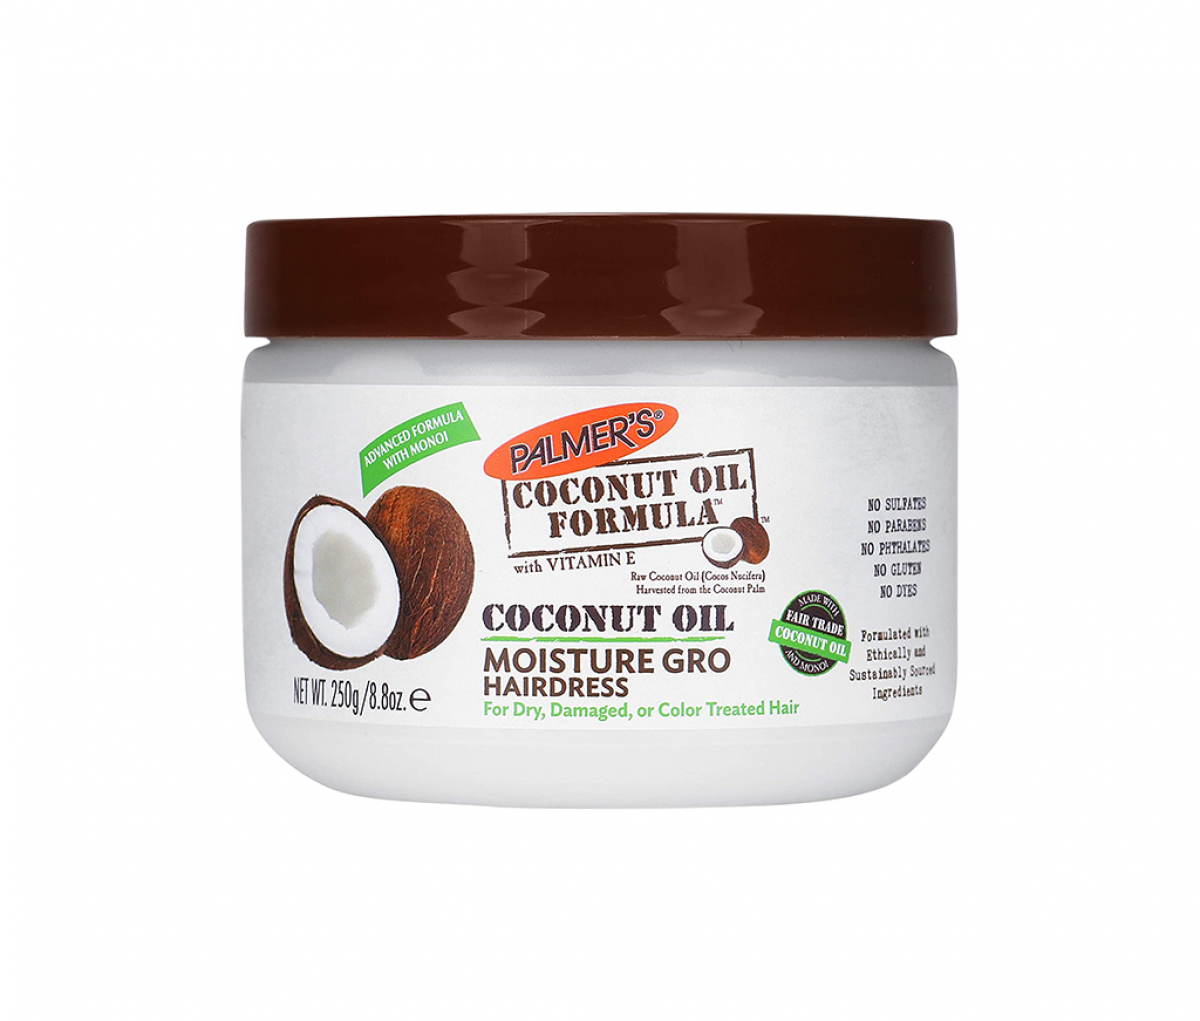 Palmers coconut oil formula moisture gro hairdress 